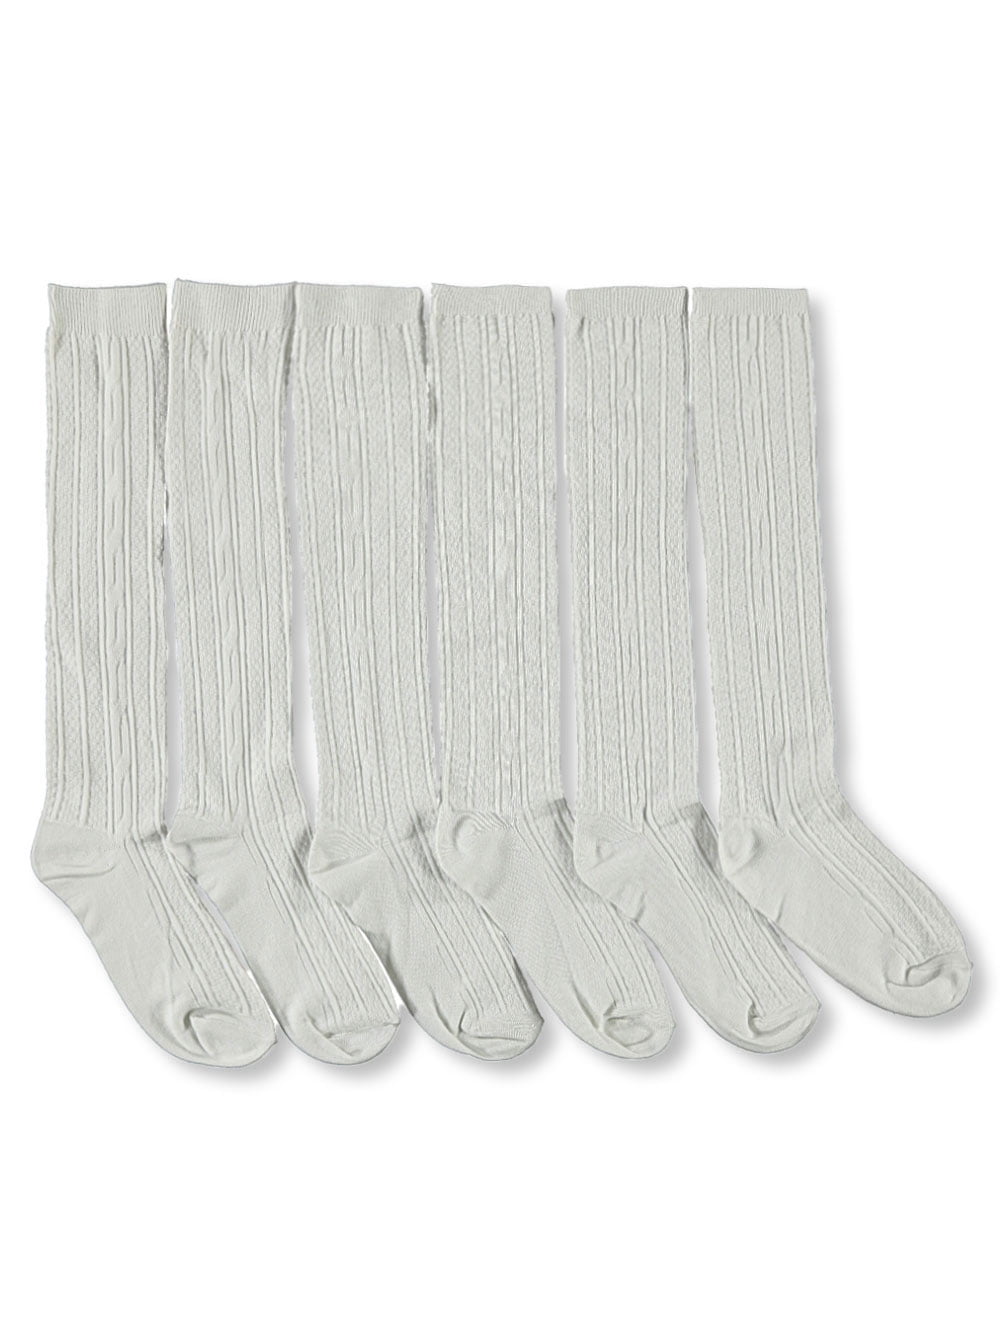 Girls/Kids Knee High Socks Bow Cotton Rich White Grey Black Navy Long School Socks Babies Smart Formal